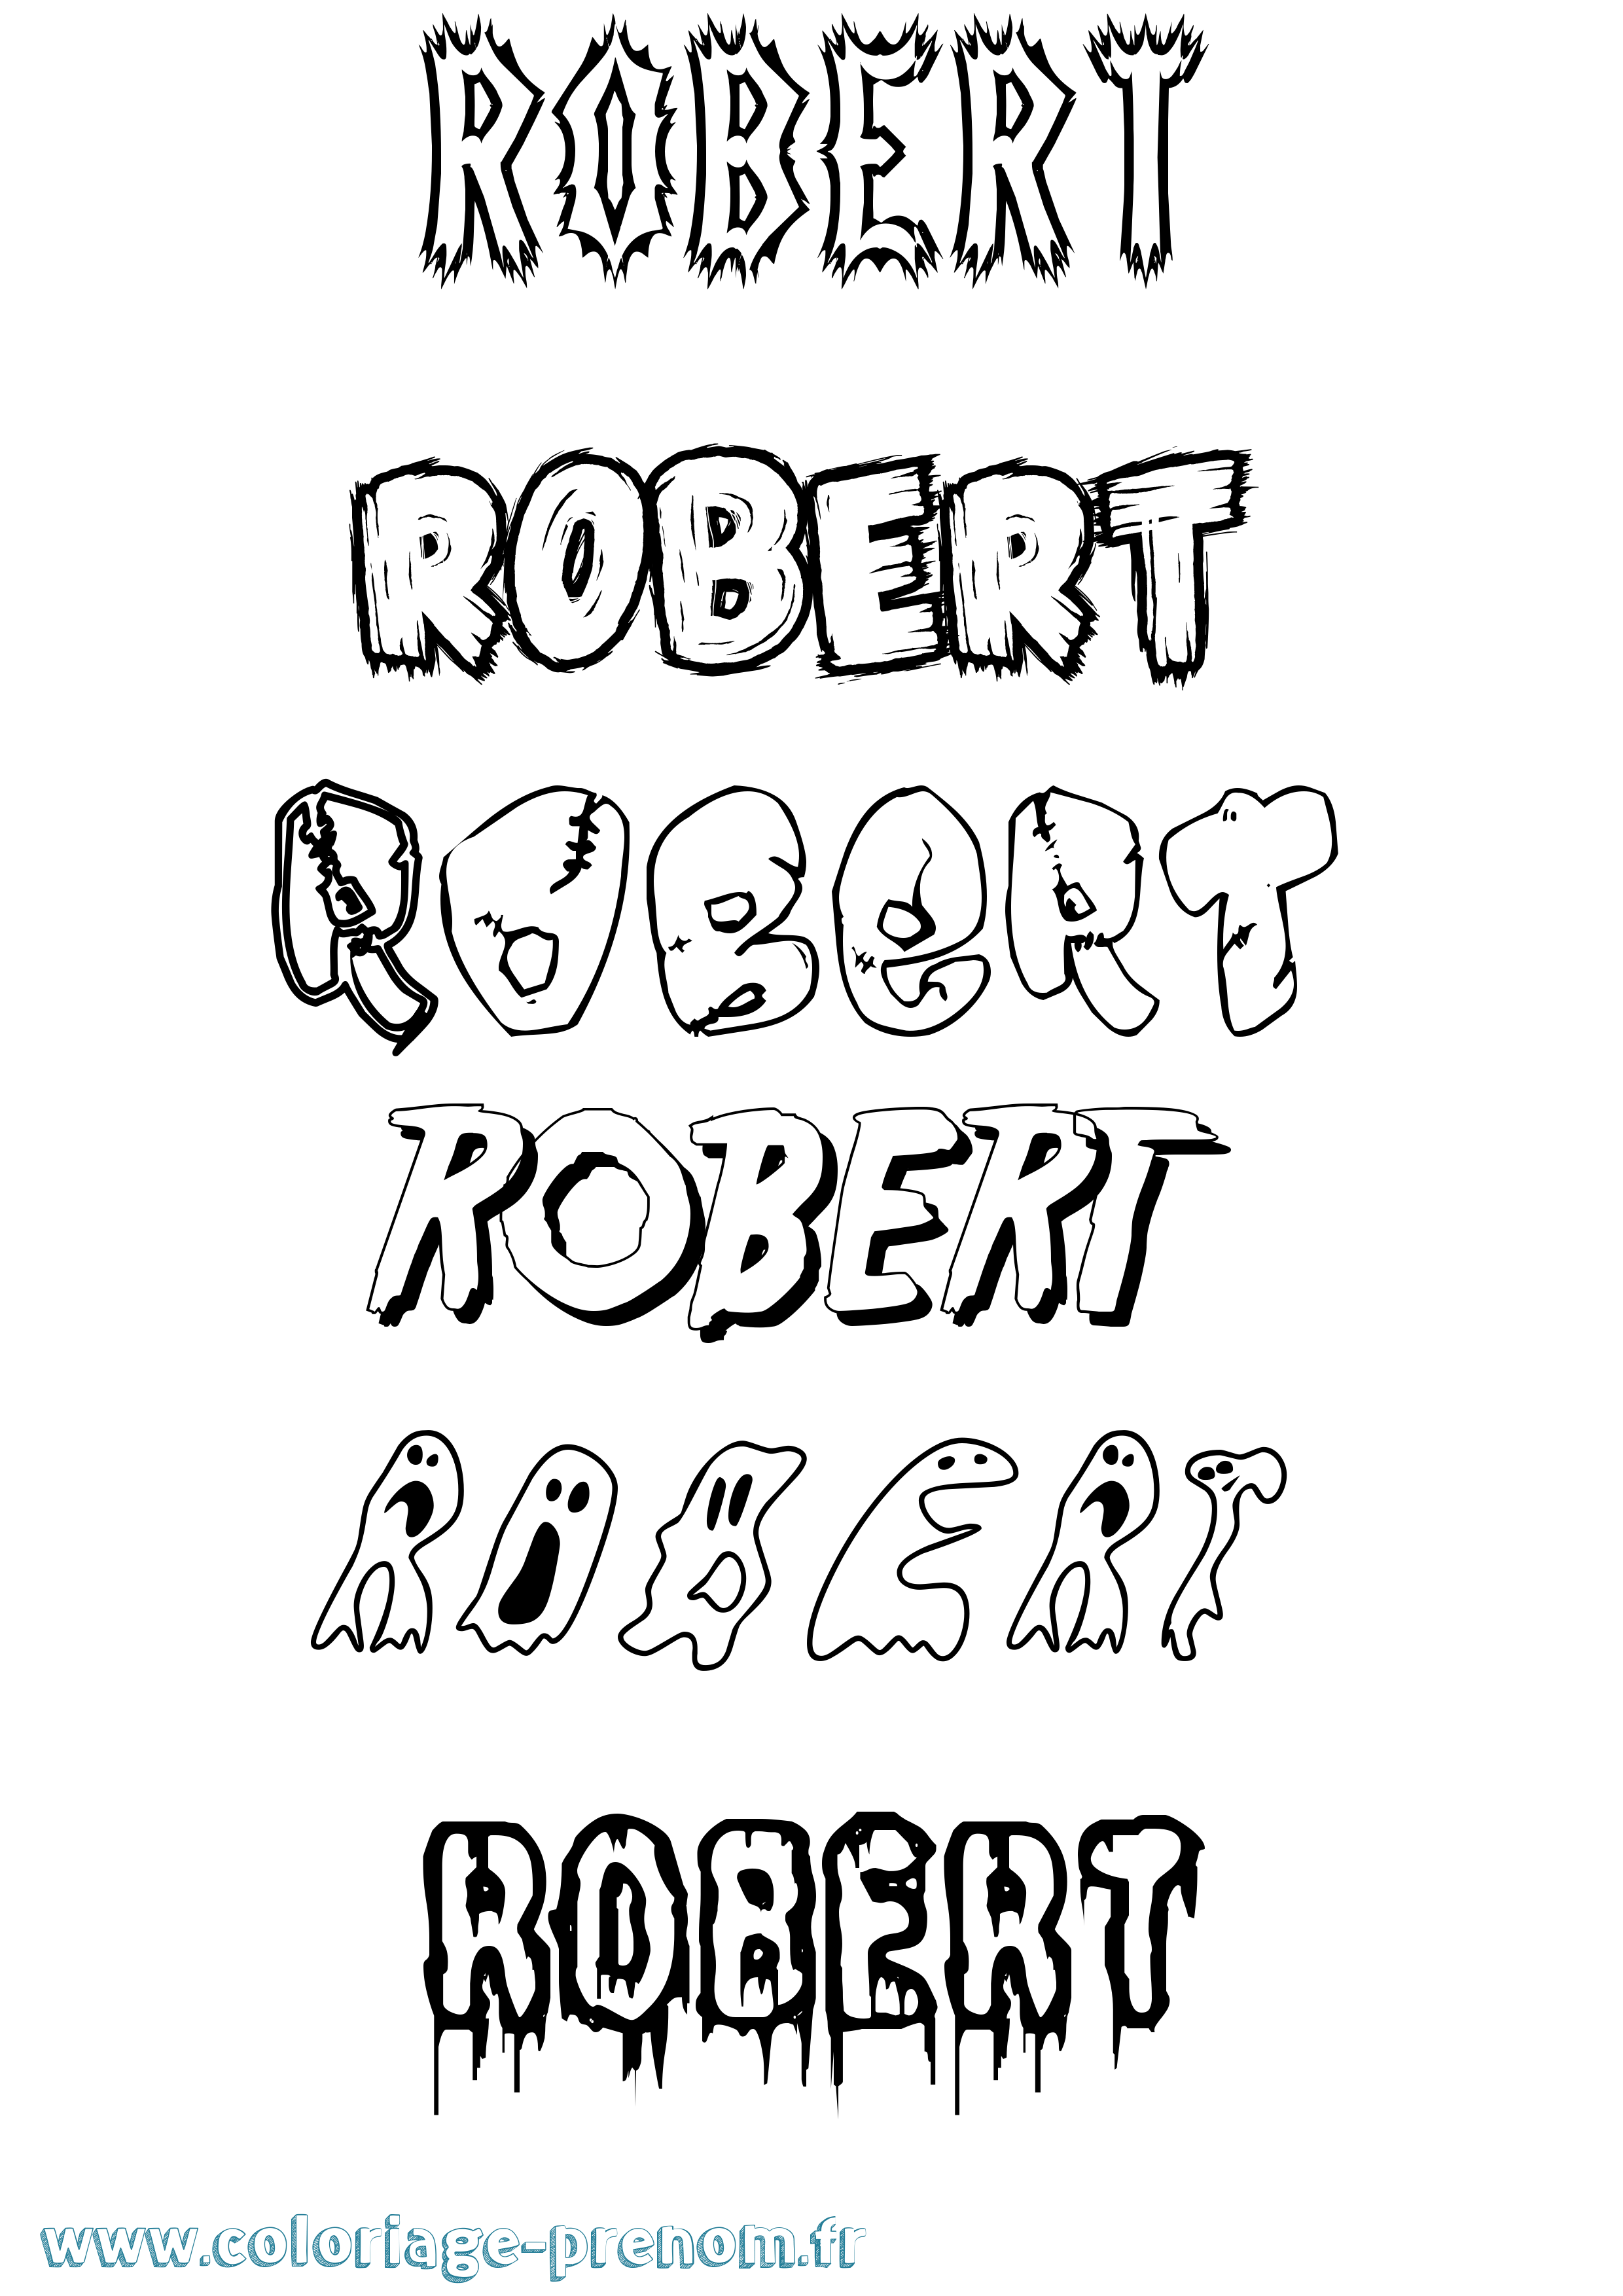 Coloriage prénom Robert Frisson